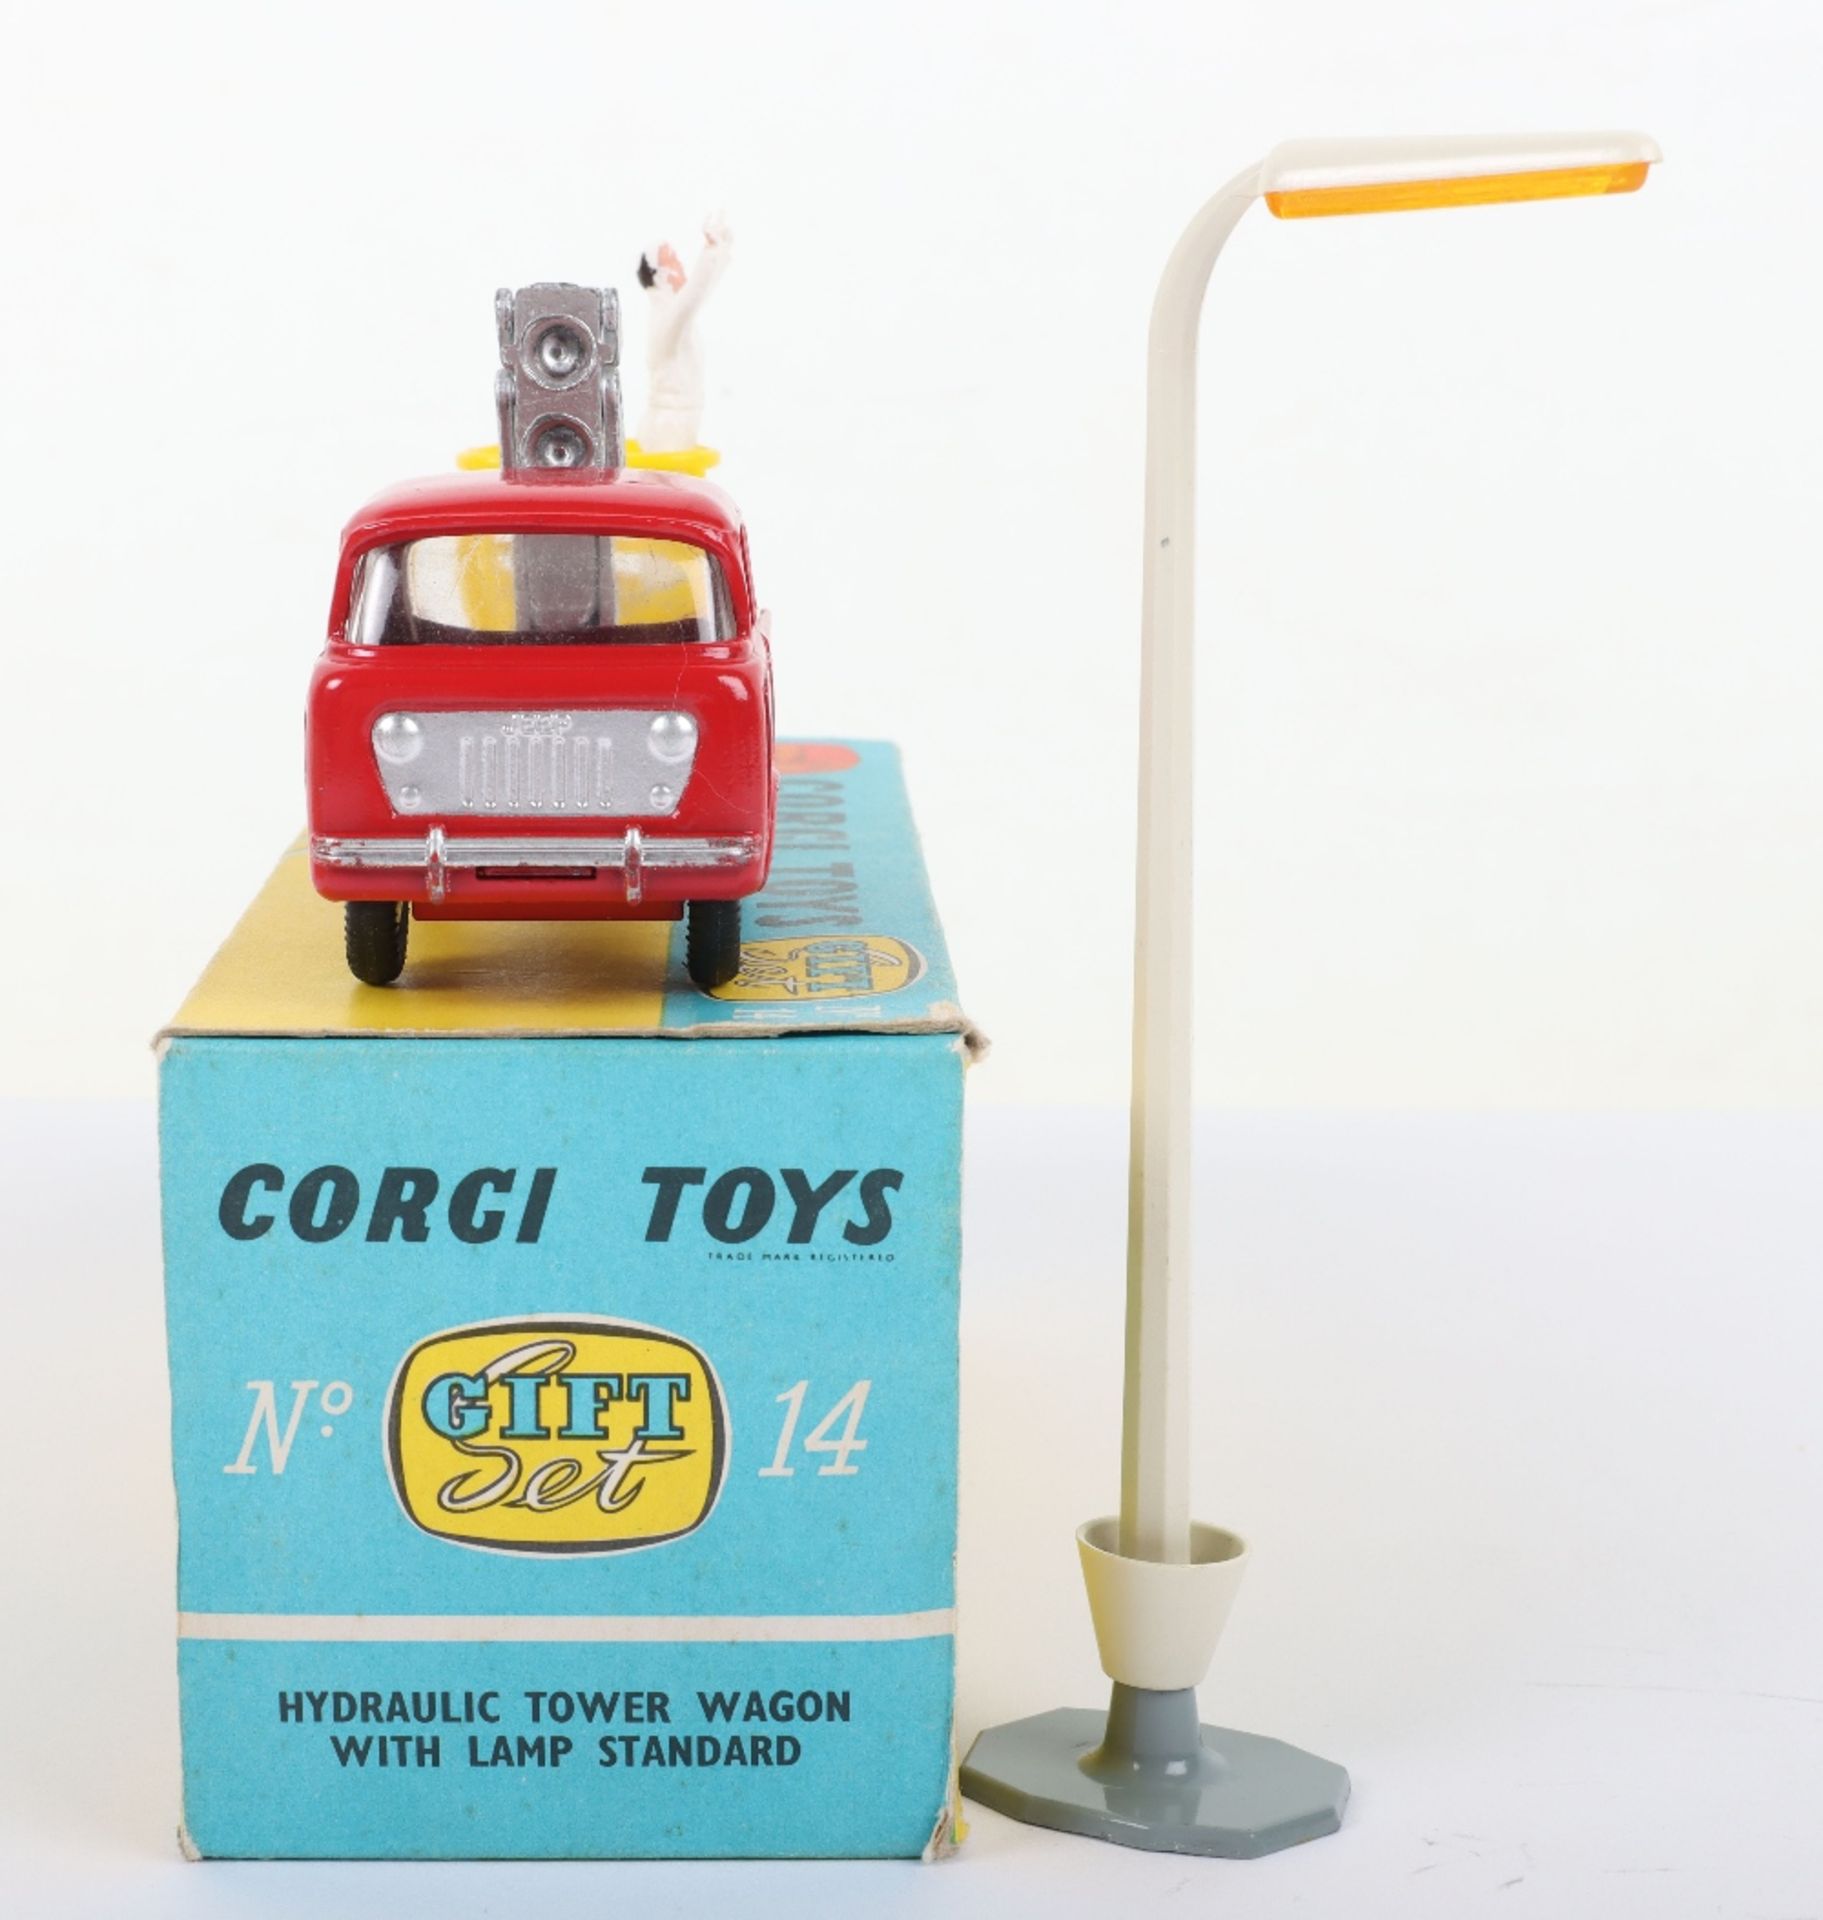 Corgi Toys Gift Set 14 Hydraulic Tower Wagon with Lamp Standard - Bild 3 aus 5